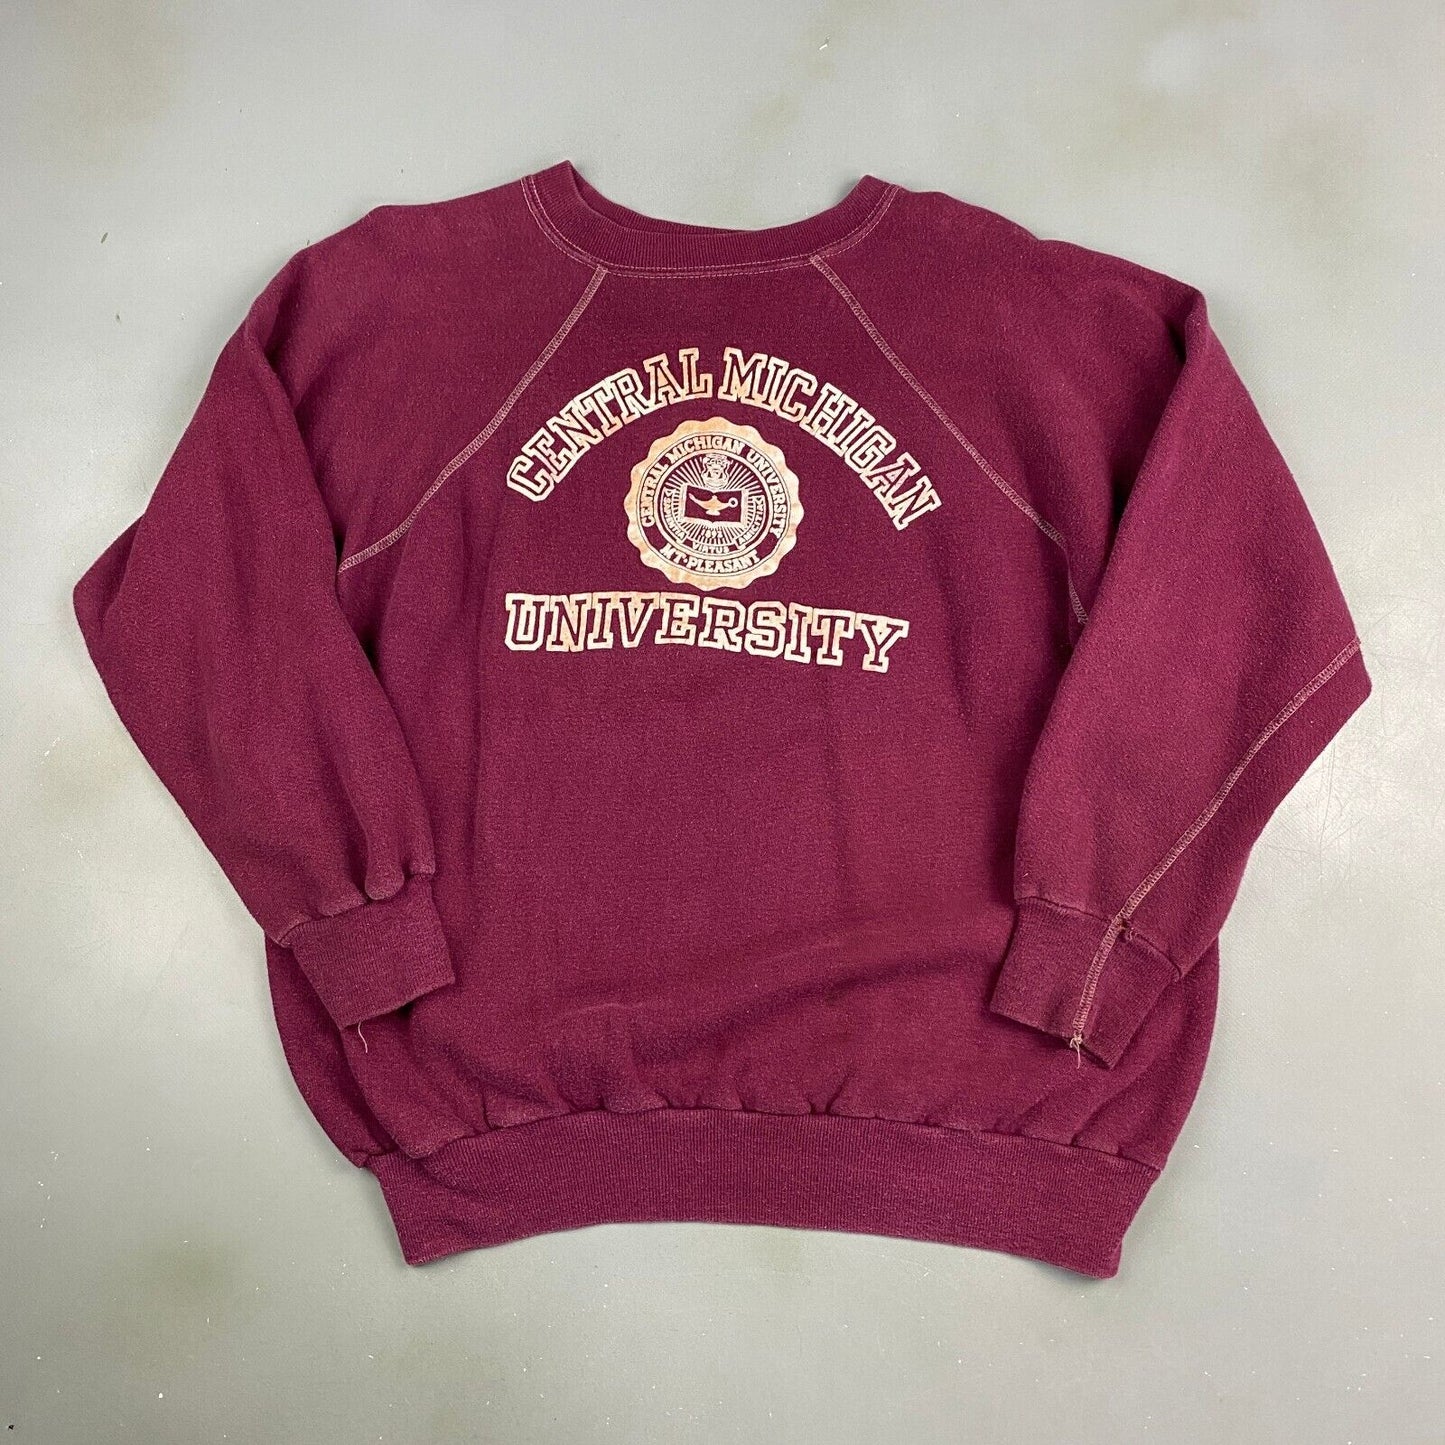 VINTAGE 70s Central Michigan University Crewneck Sweater sz Medium Adult